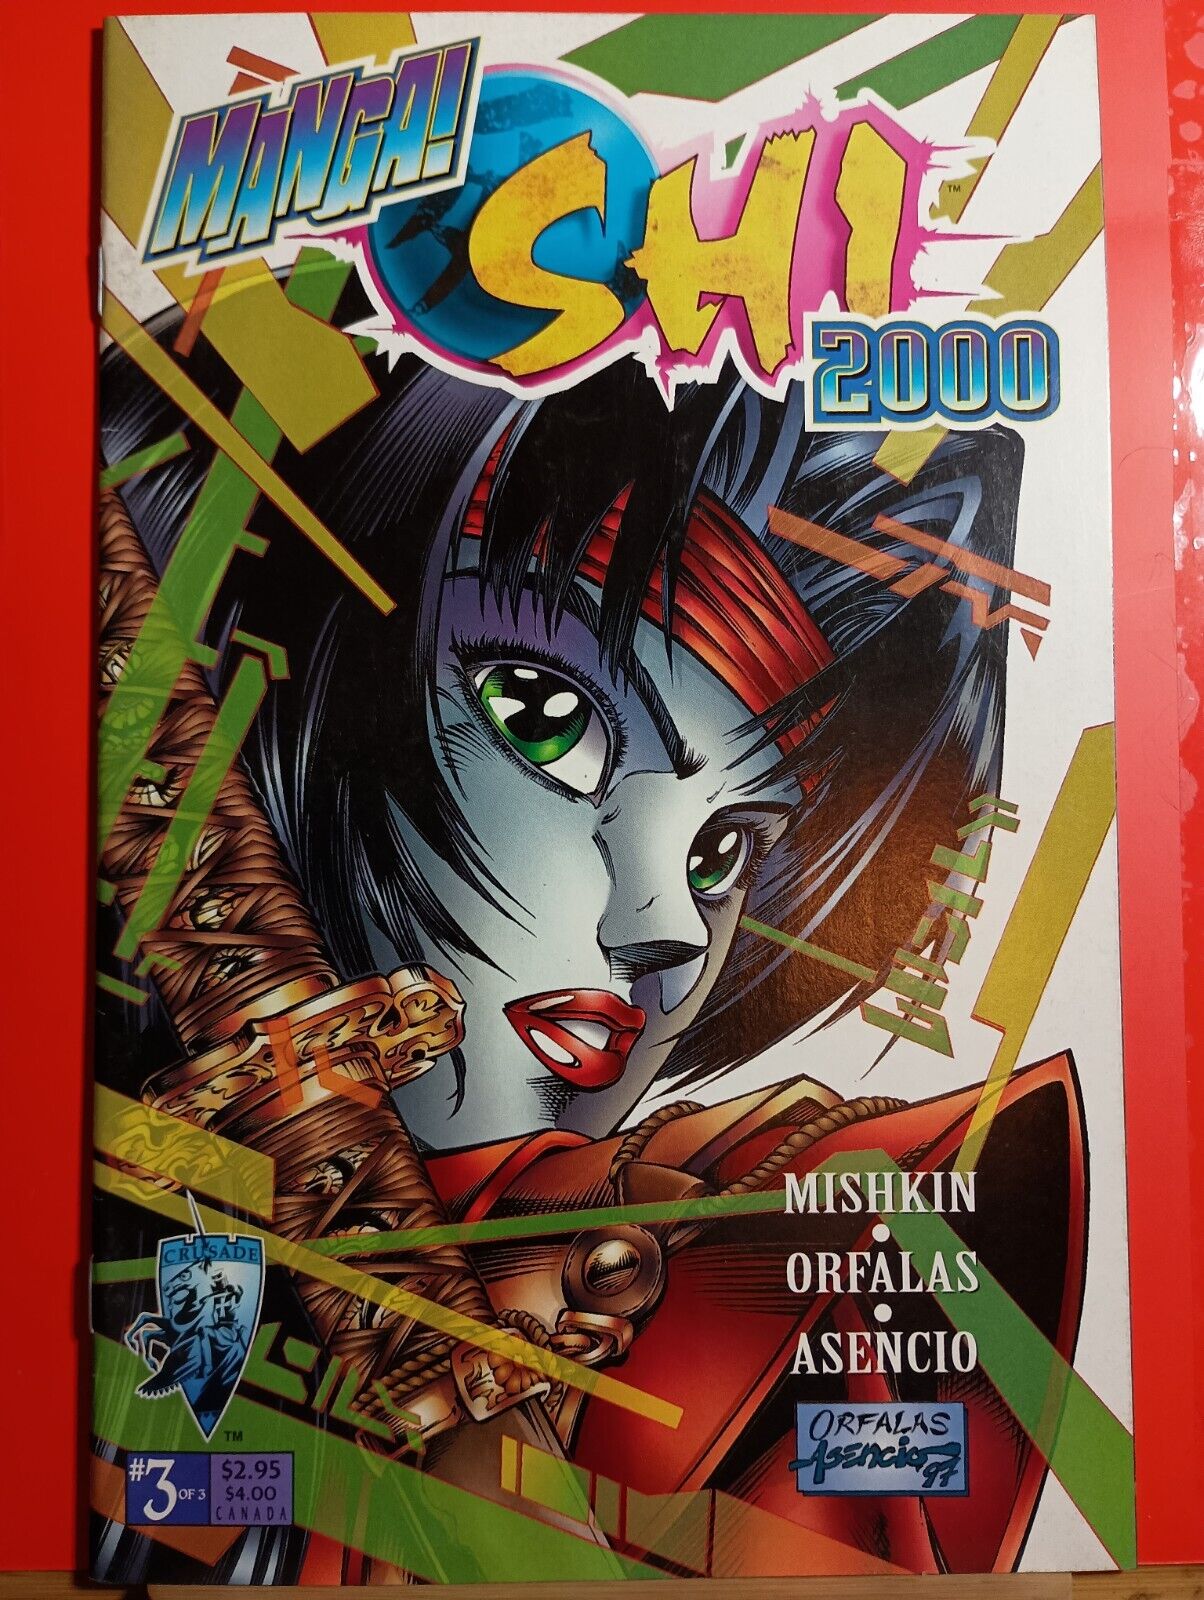 1997 Crusade Comics Manga Shi 2000 Issue 3 Jason Orfalas Cover Artist FREE SHPNG